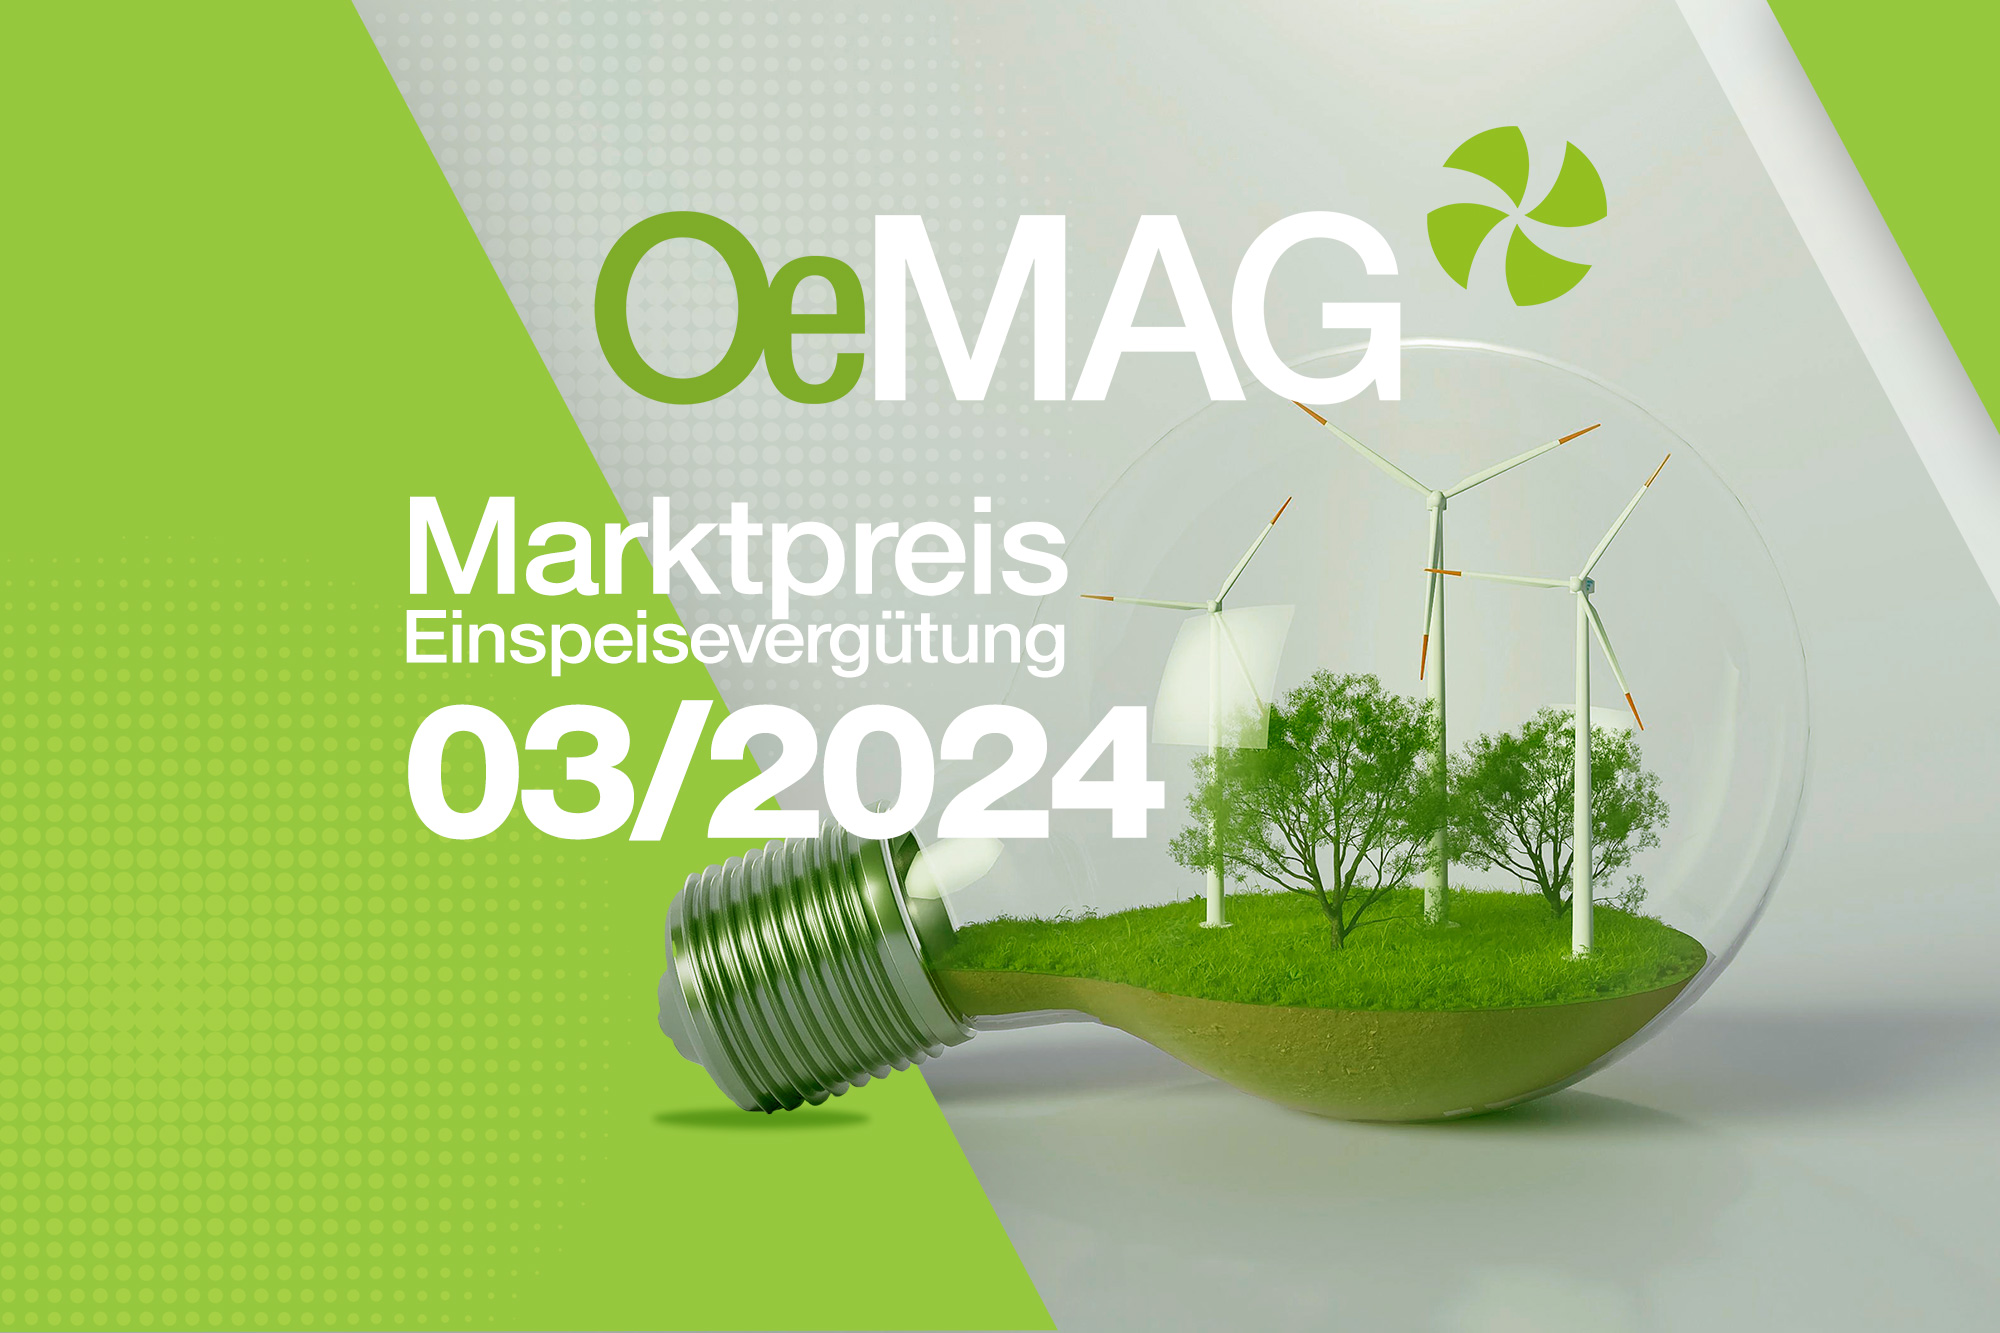 OeMAG Marktpreis 03/2024 Einspeisevergütung 5,776 ct/kWh